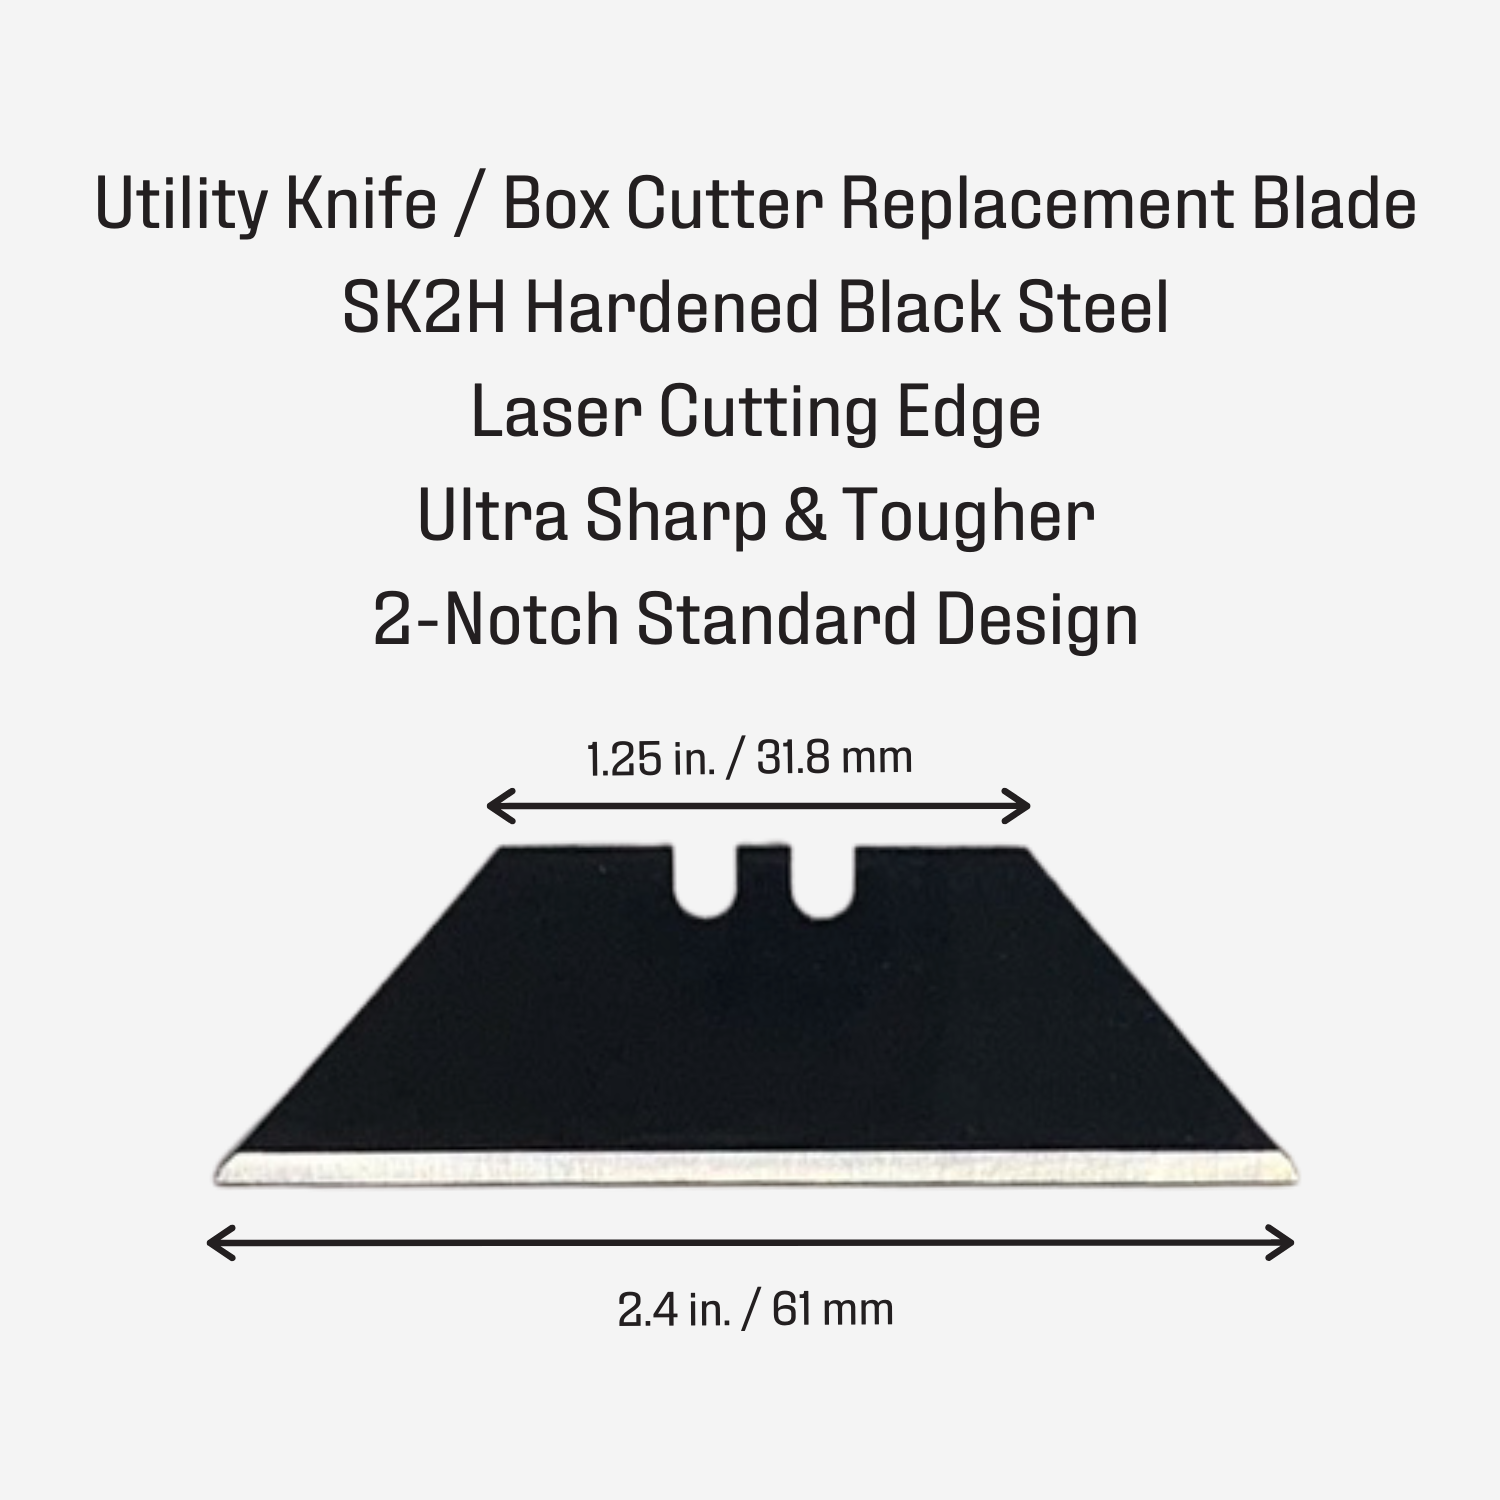 Berkling Utility Knife Blades 100 Pcs with Dispenser, SK2H Laser Sharpened Hardened Black Carbon Steel, Ultra 3X Sharper and 5X More Durable